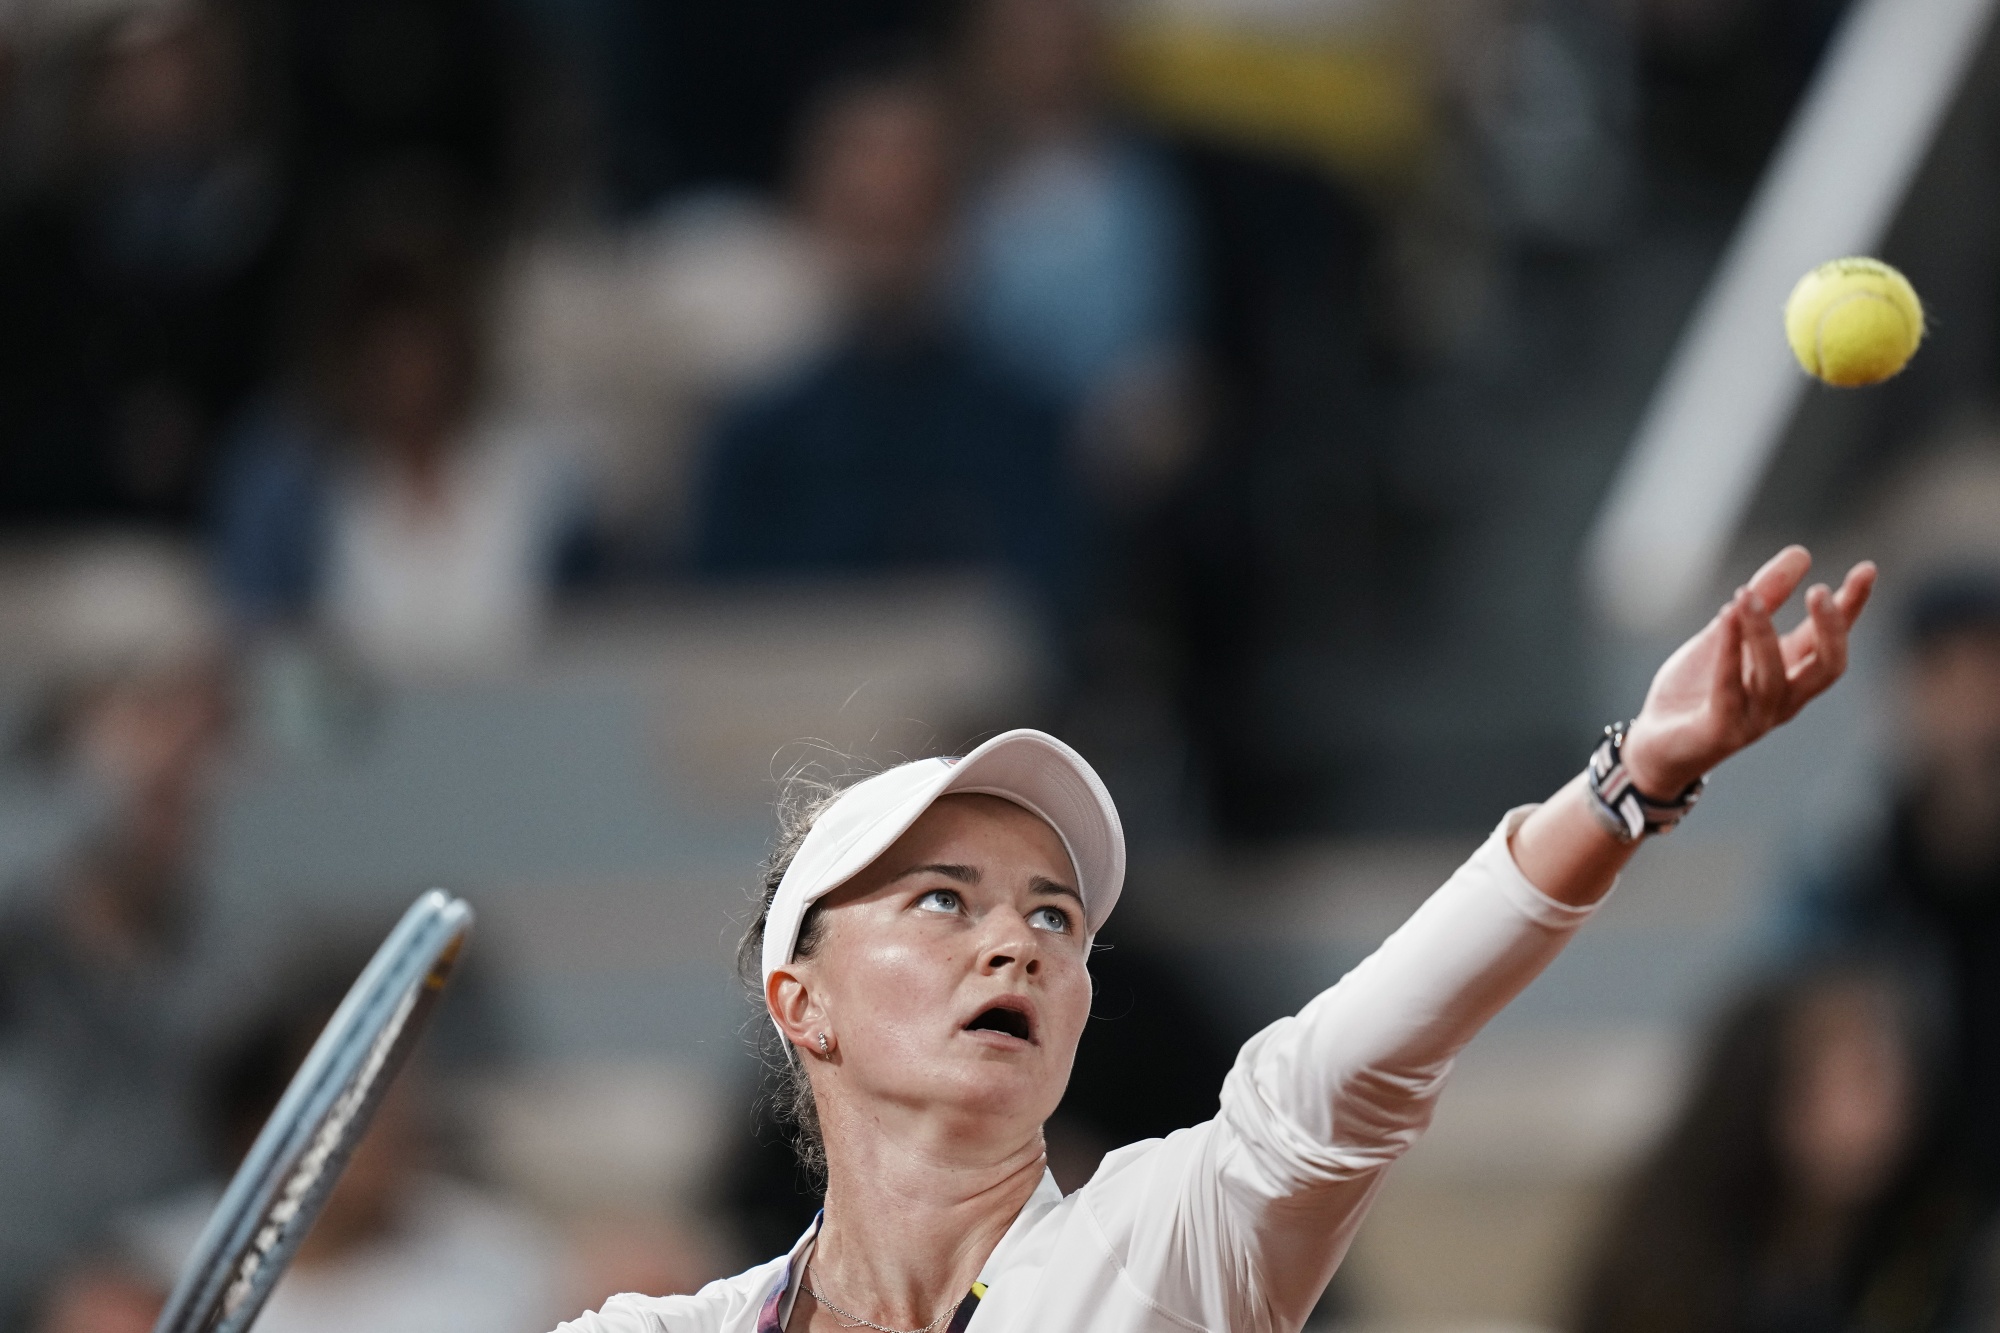 How Medvedev's Roland Garros Loss Impacts Battle For World No. 1, ATP Tour